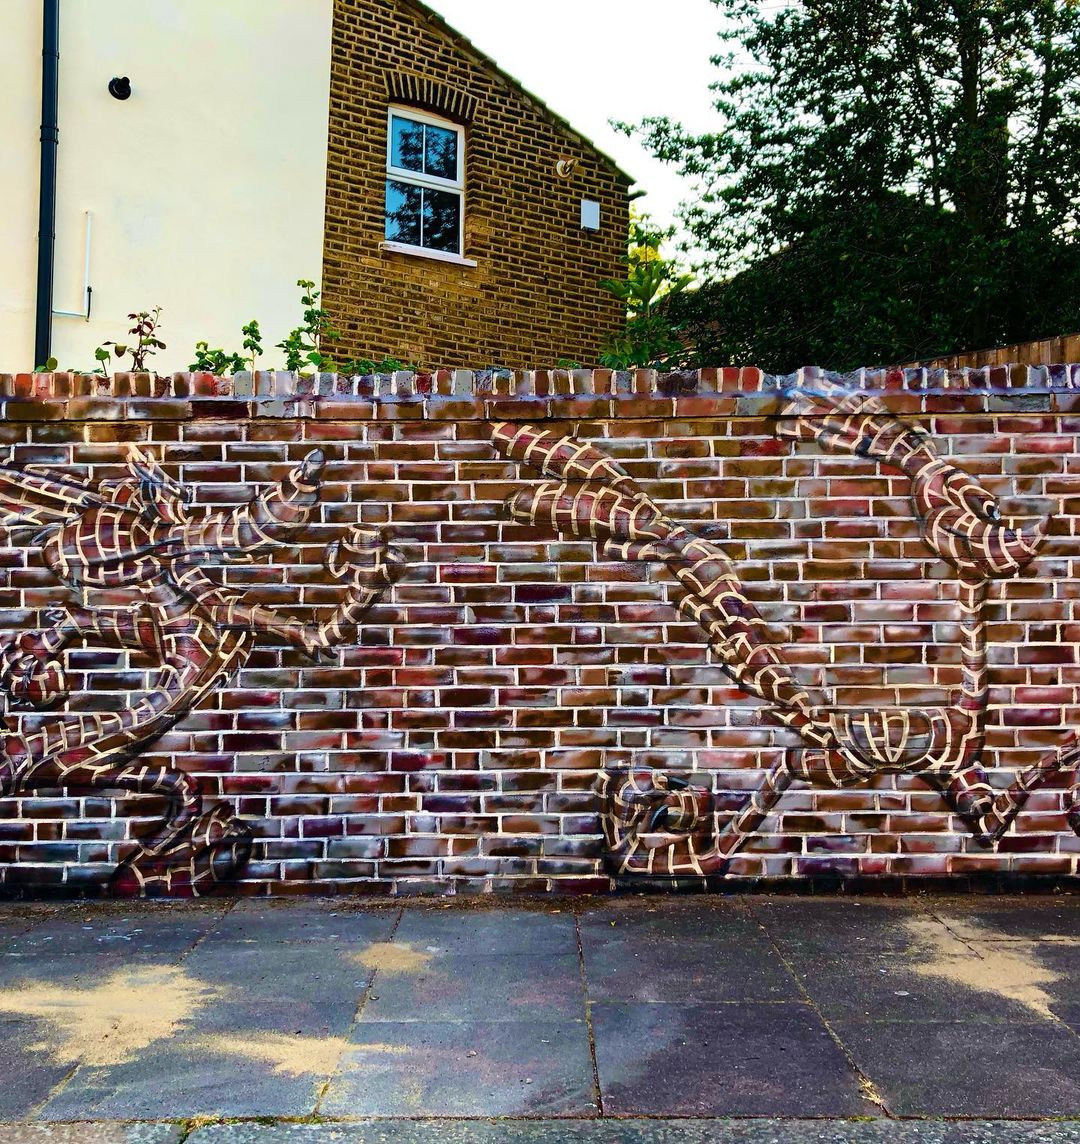 #Streetart: '#WileECoyote and the #RoadRunner' by #Pad @ #Beckenham, UK
More pics at: barbarapicci.com/2023/07/28/str…
#brickart #streetartBeckenham #streetartuk #ukstreetart #arteurbana #urbanart #murals #muralism #contemporaryart #artecontemporanea